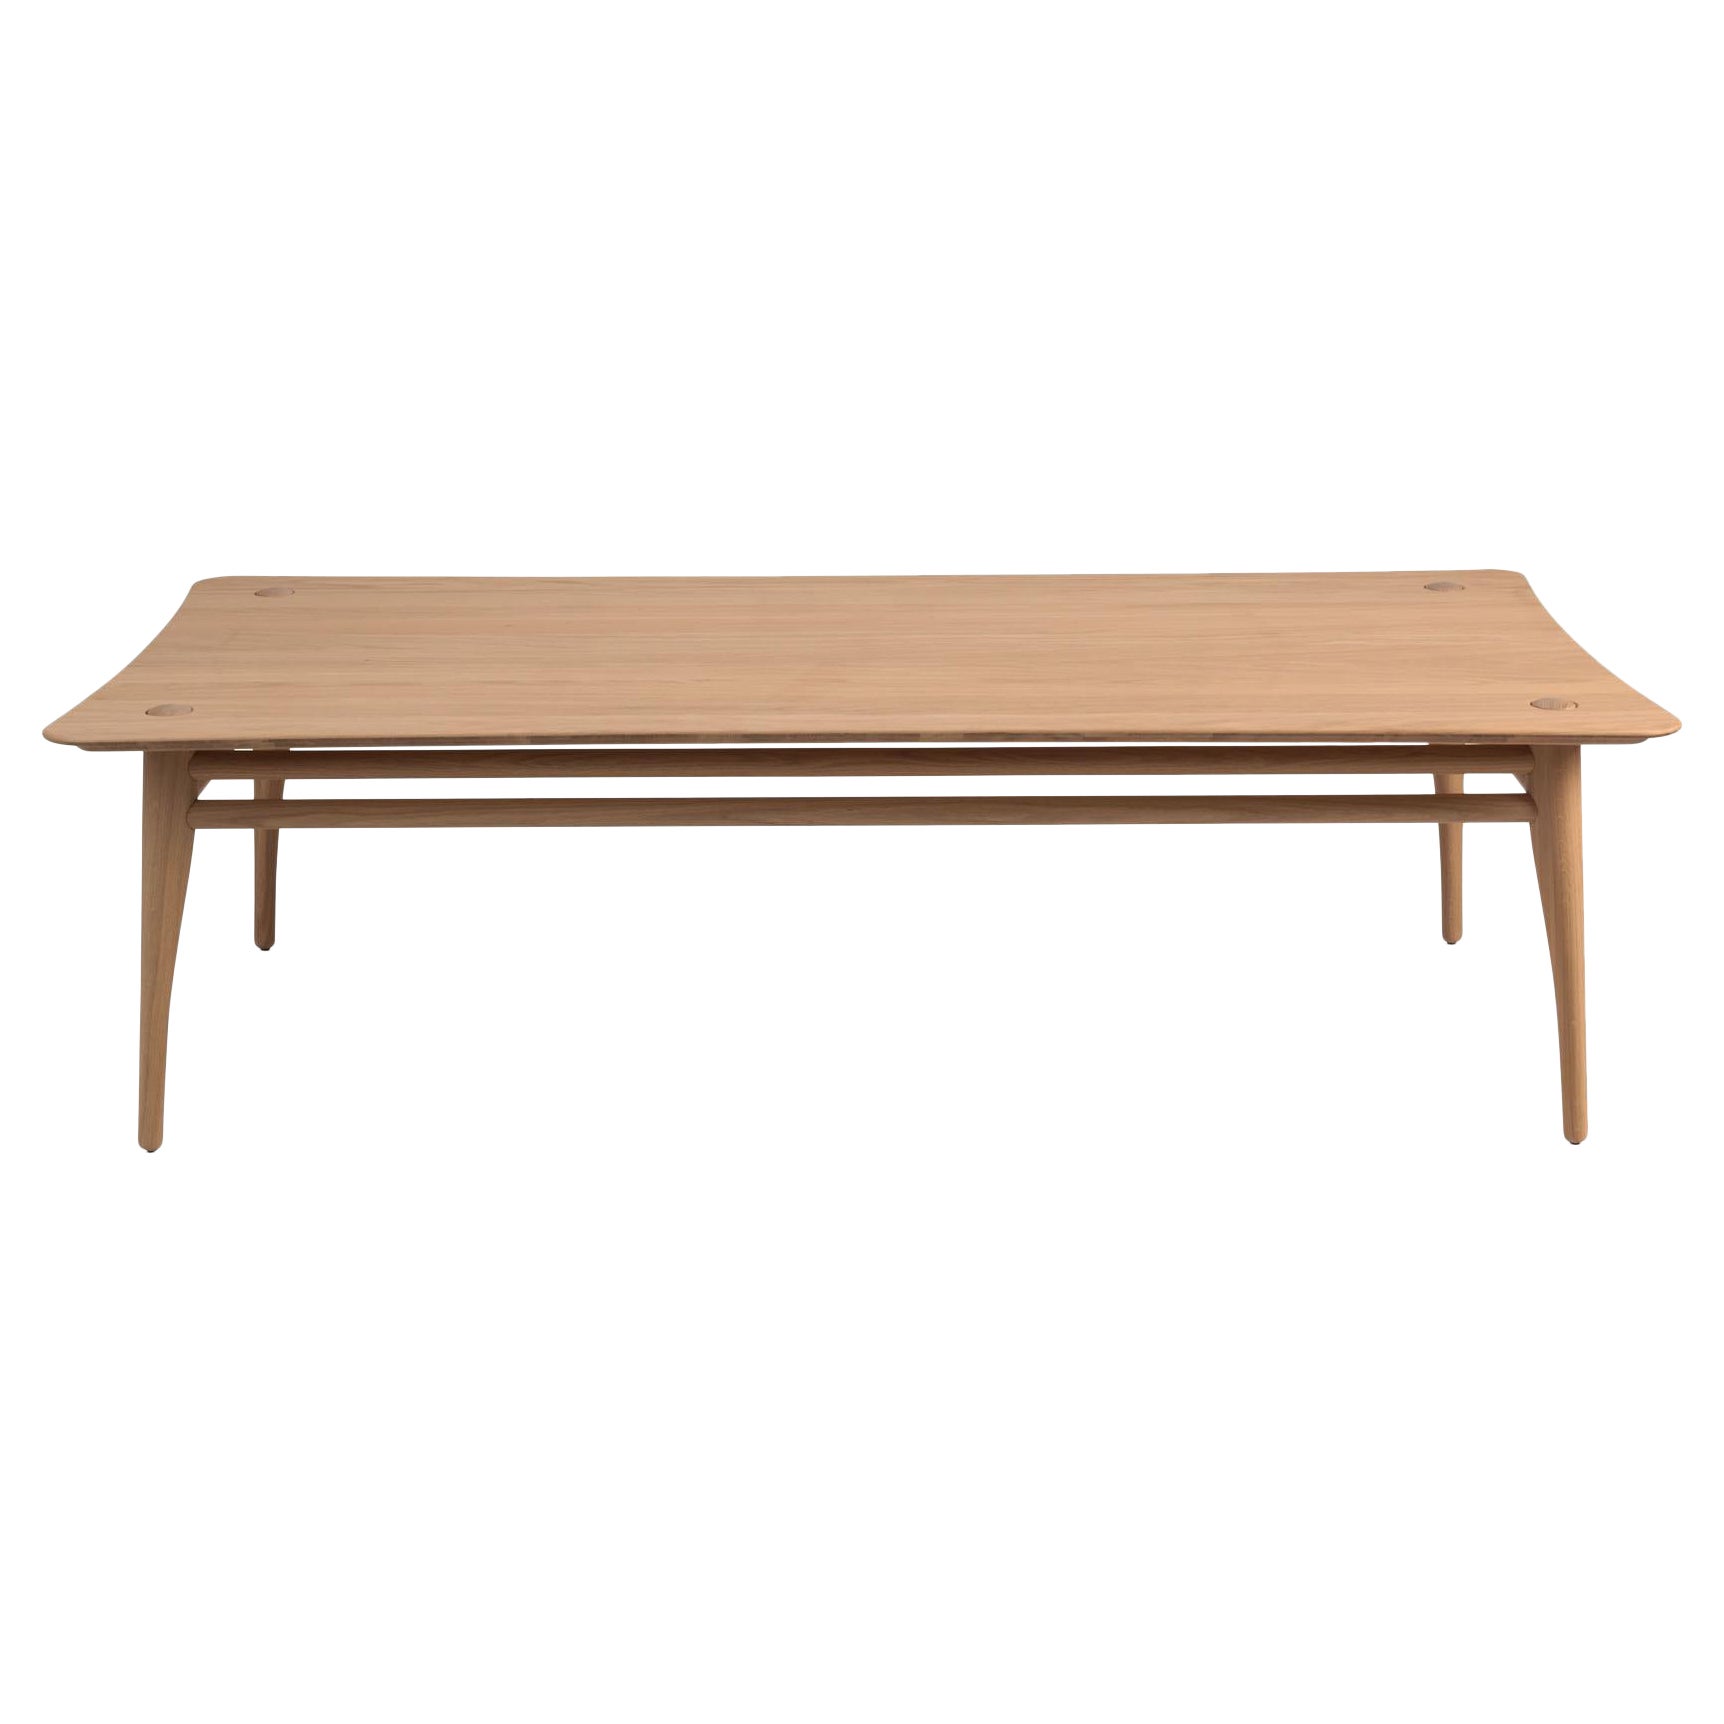 Oak Oak - table basse en chêne massif - rectangle160x80cm